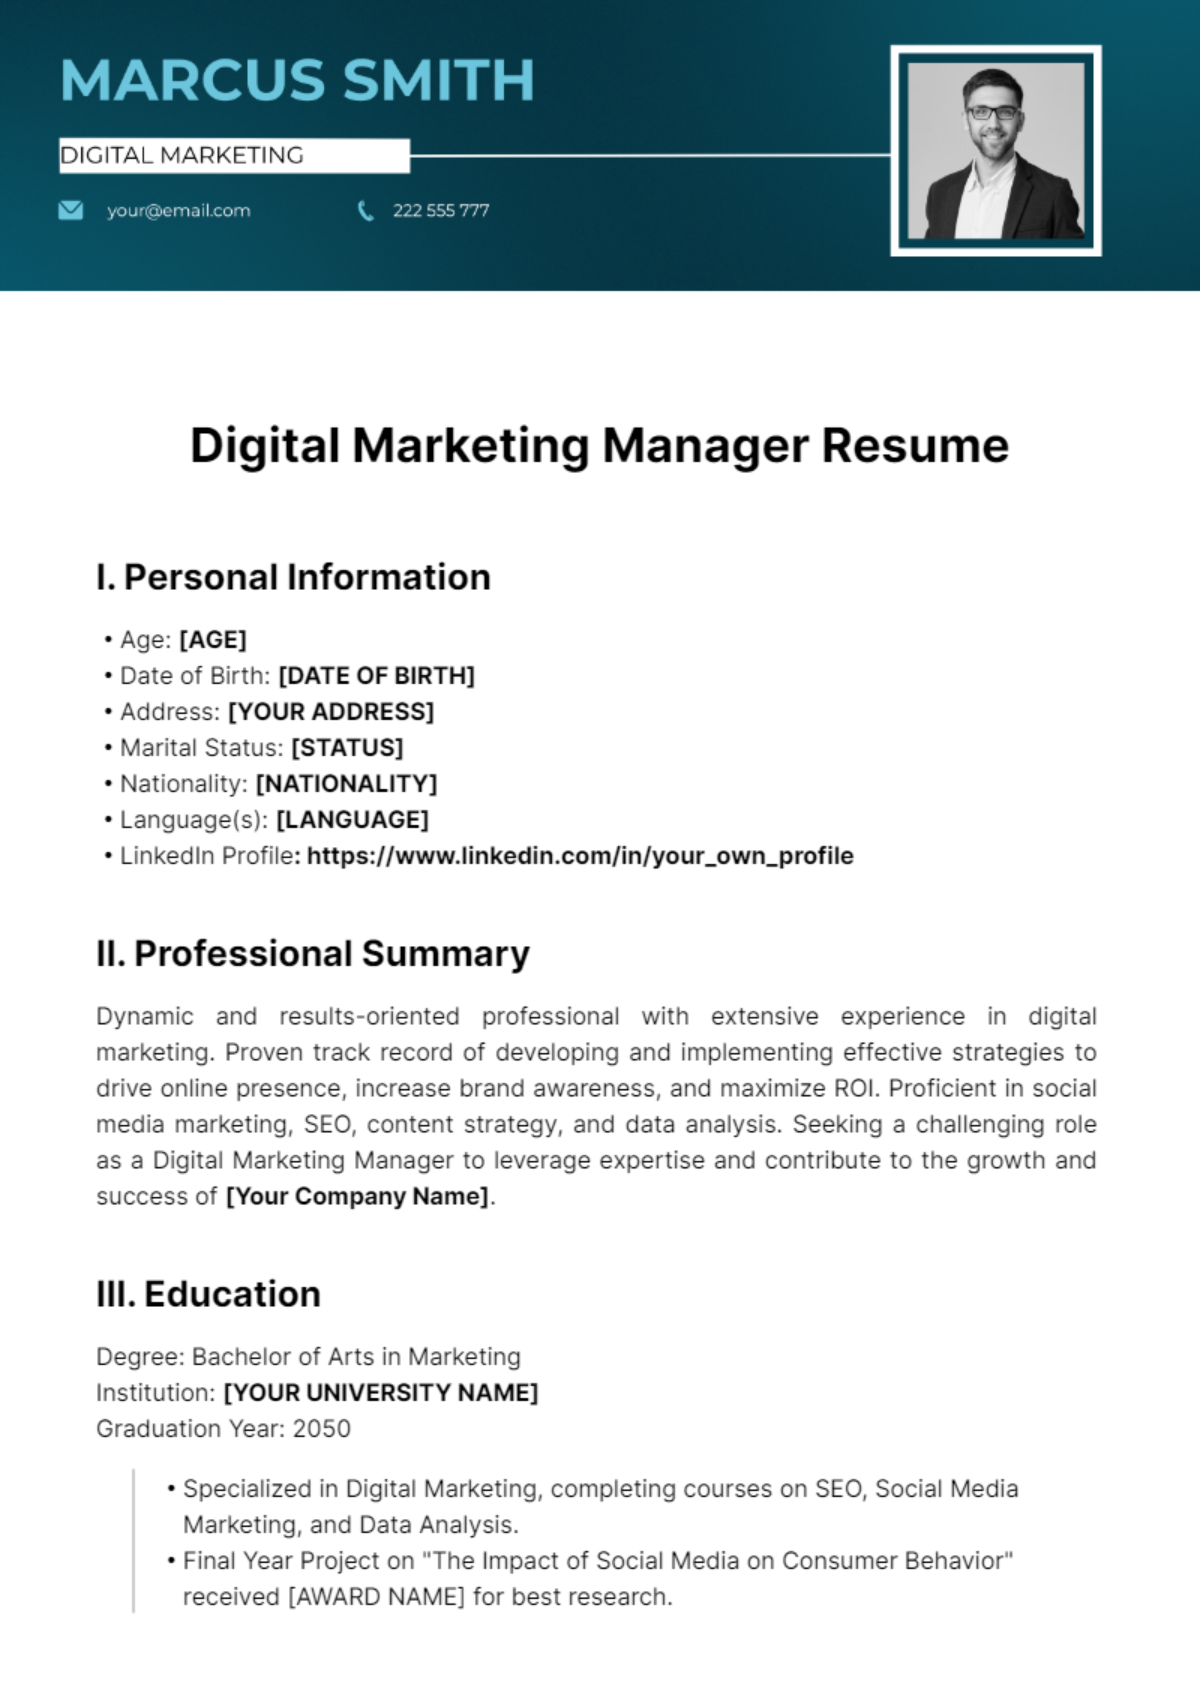 Free Digital Marketing Manager Resume Template